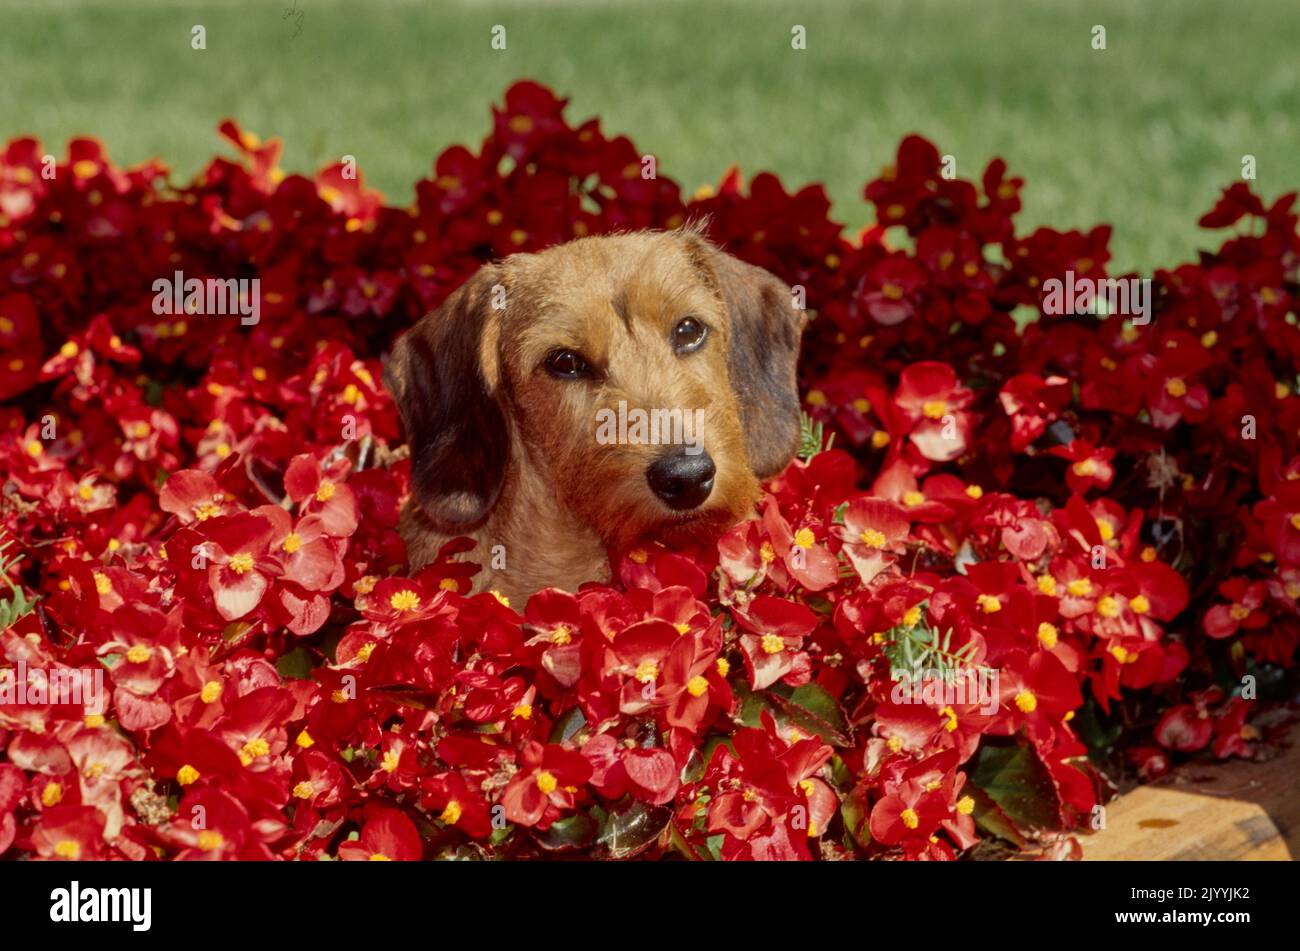 Dachshund in flower bush Stock Photo